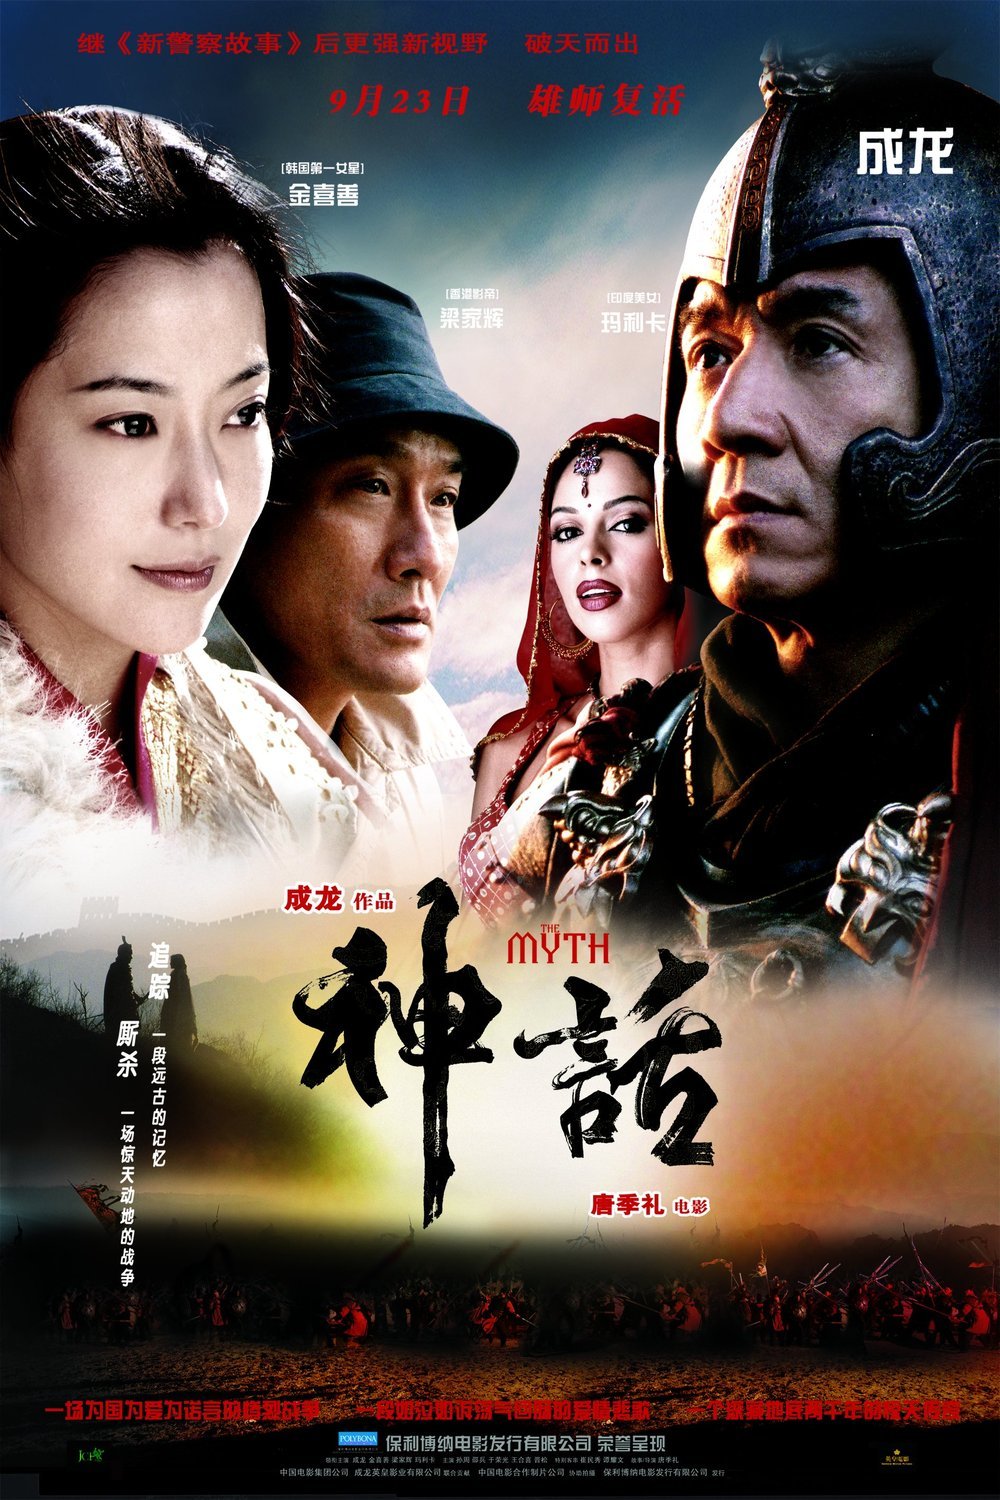 Mandarin poster of the movie San wa